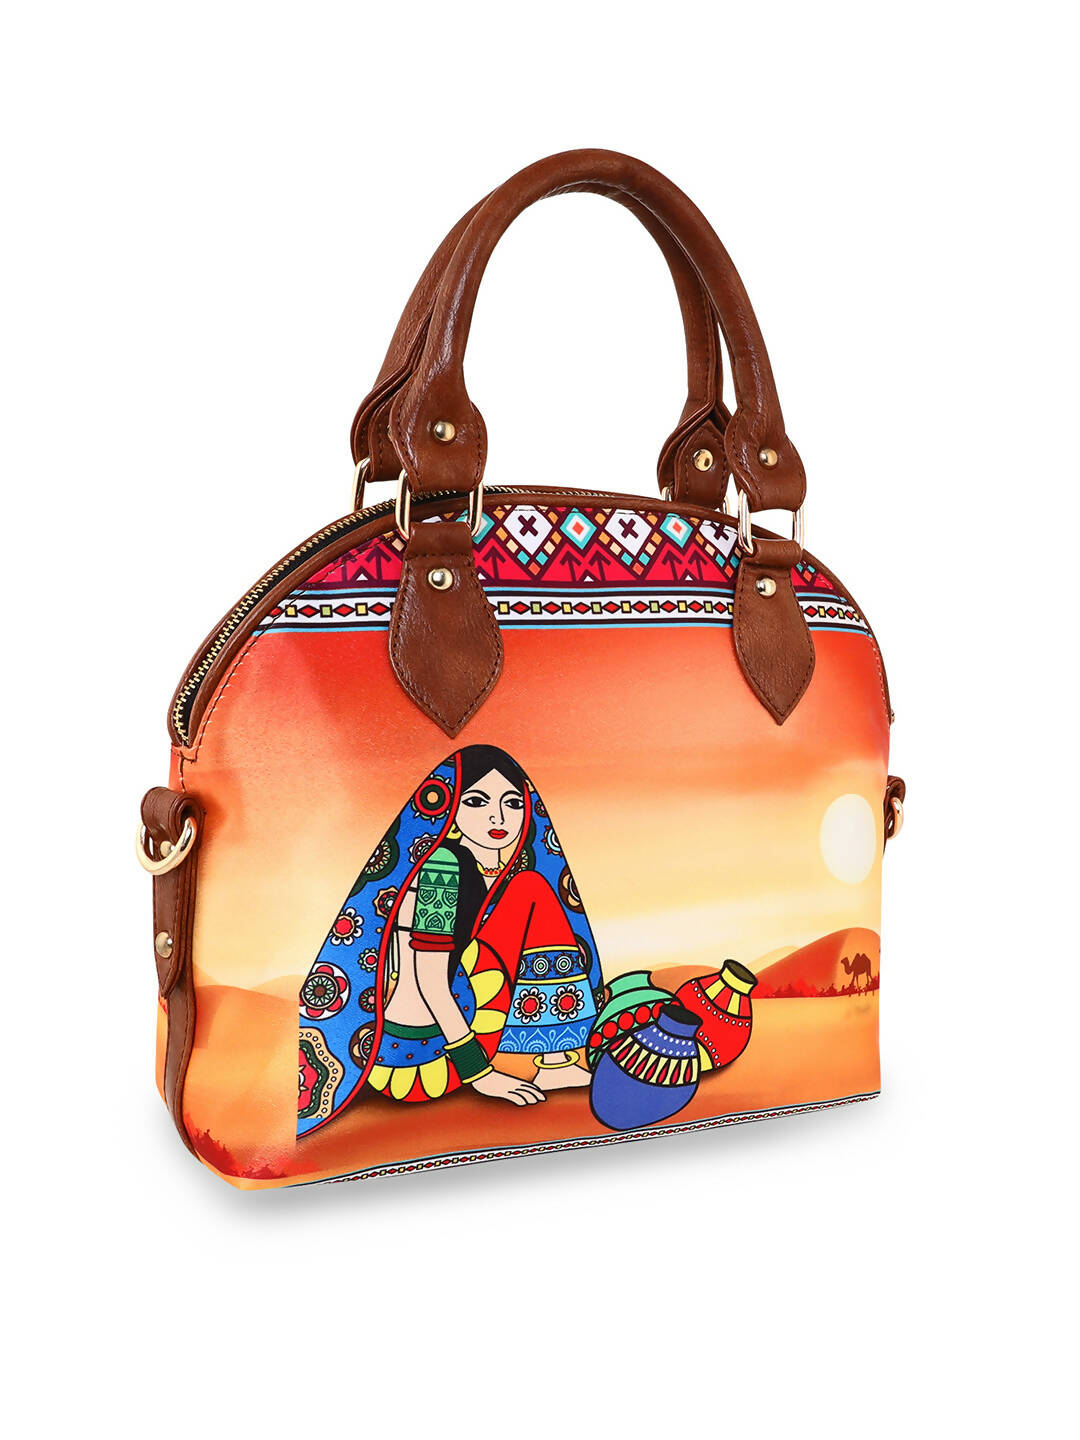 Buy All Things Sundar Women's Tote Bag (MULTI-13) at Amazon.in